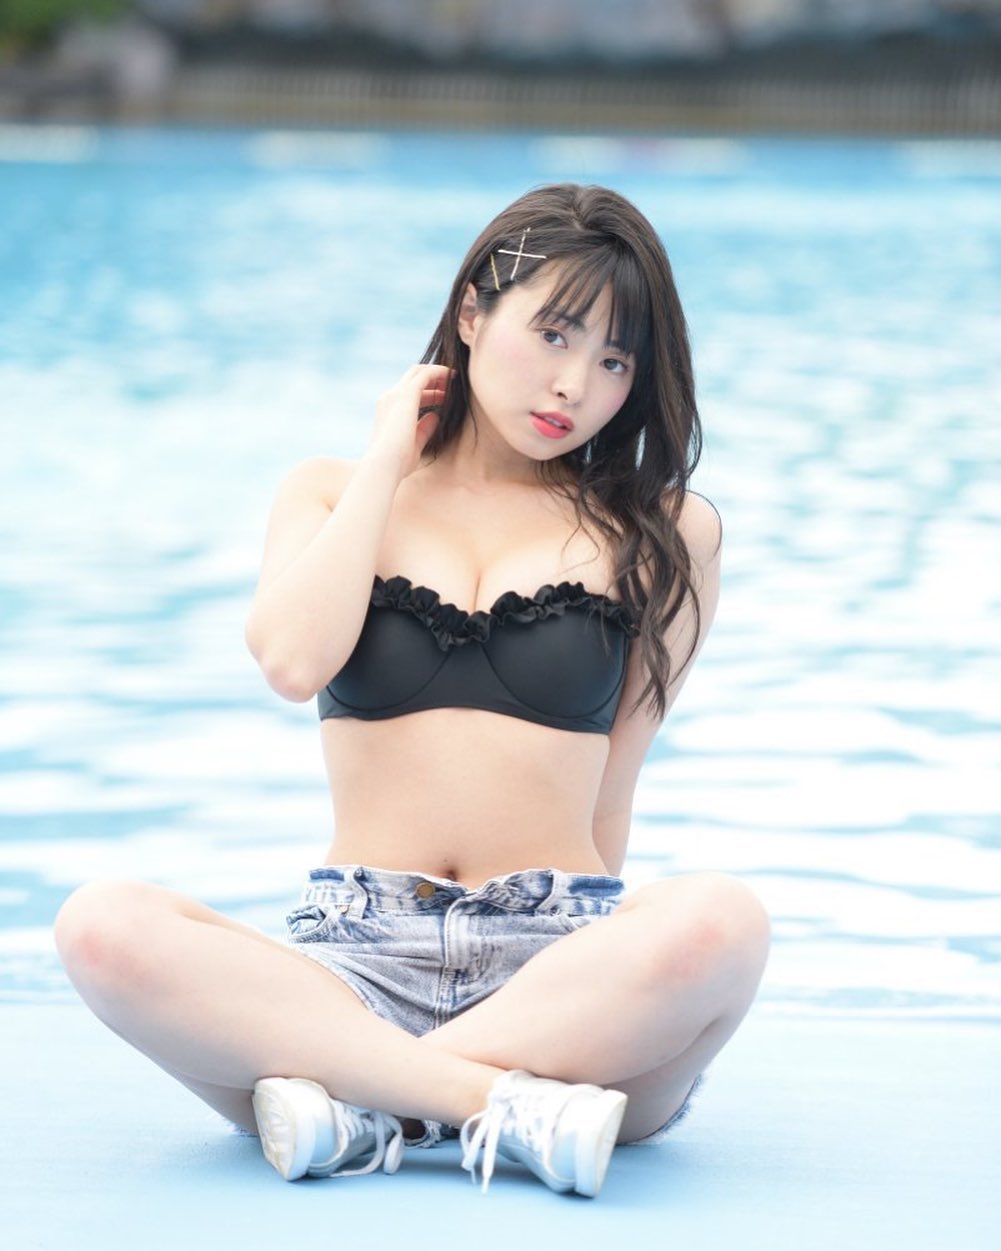 Nozomi Sato sexy Japanese gravure idol in cute black bikini top